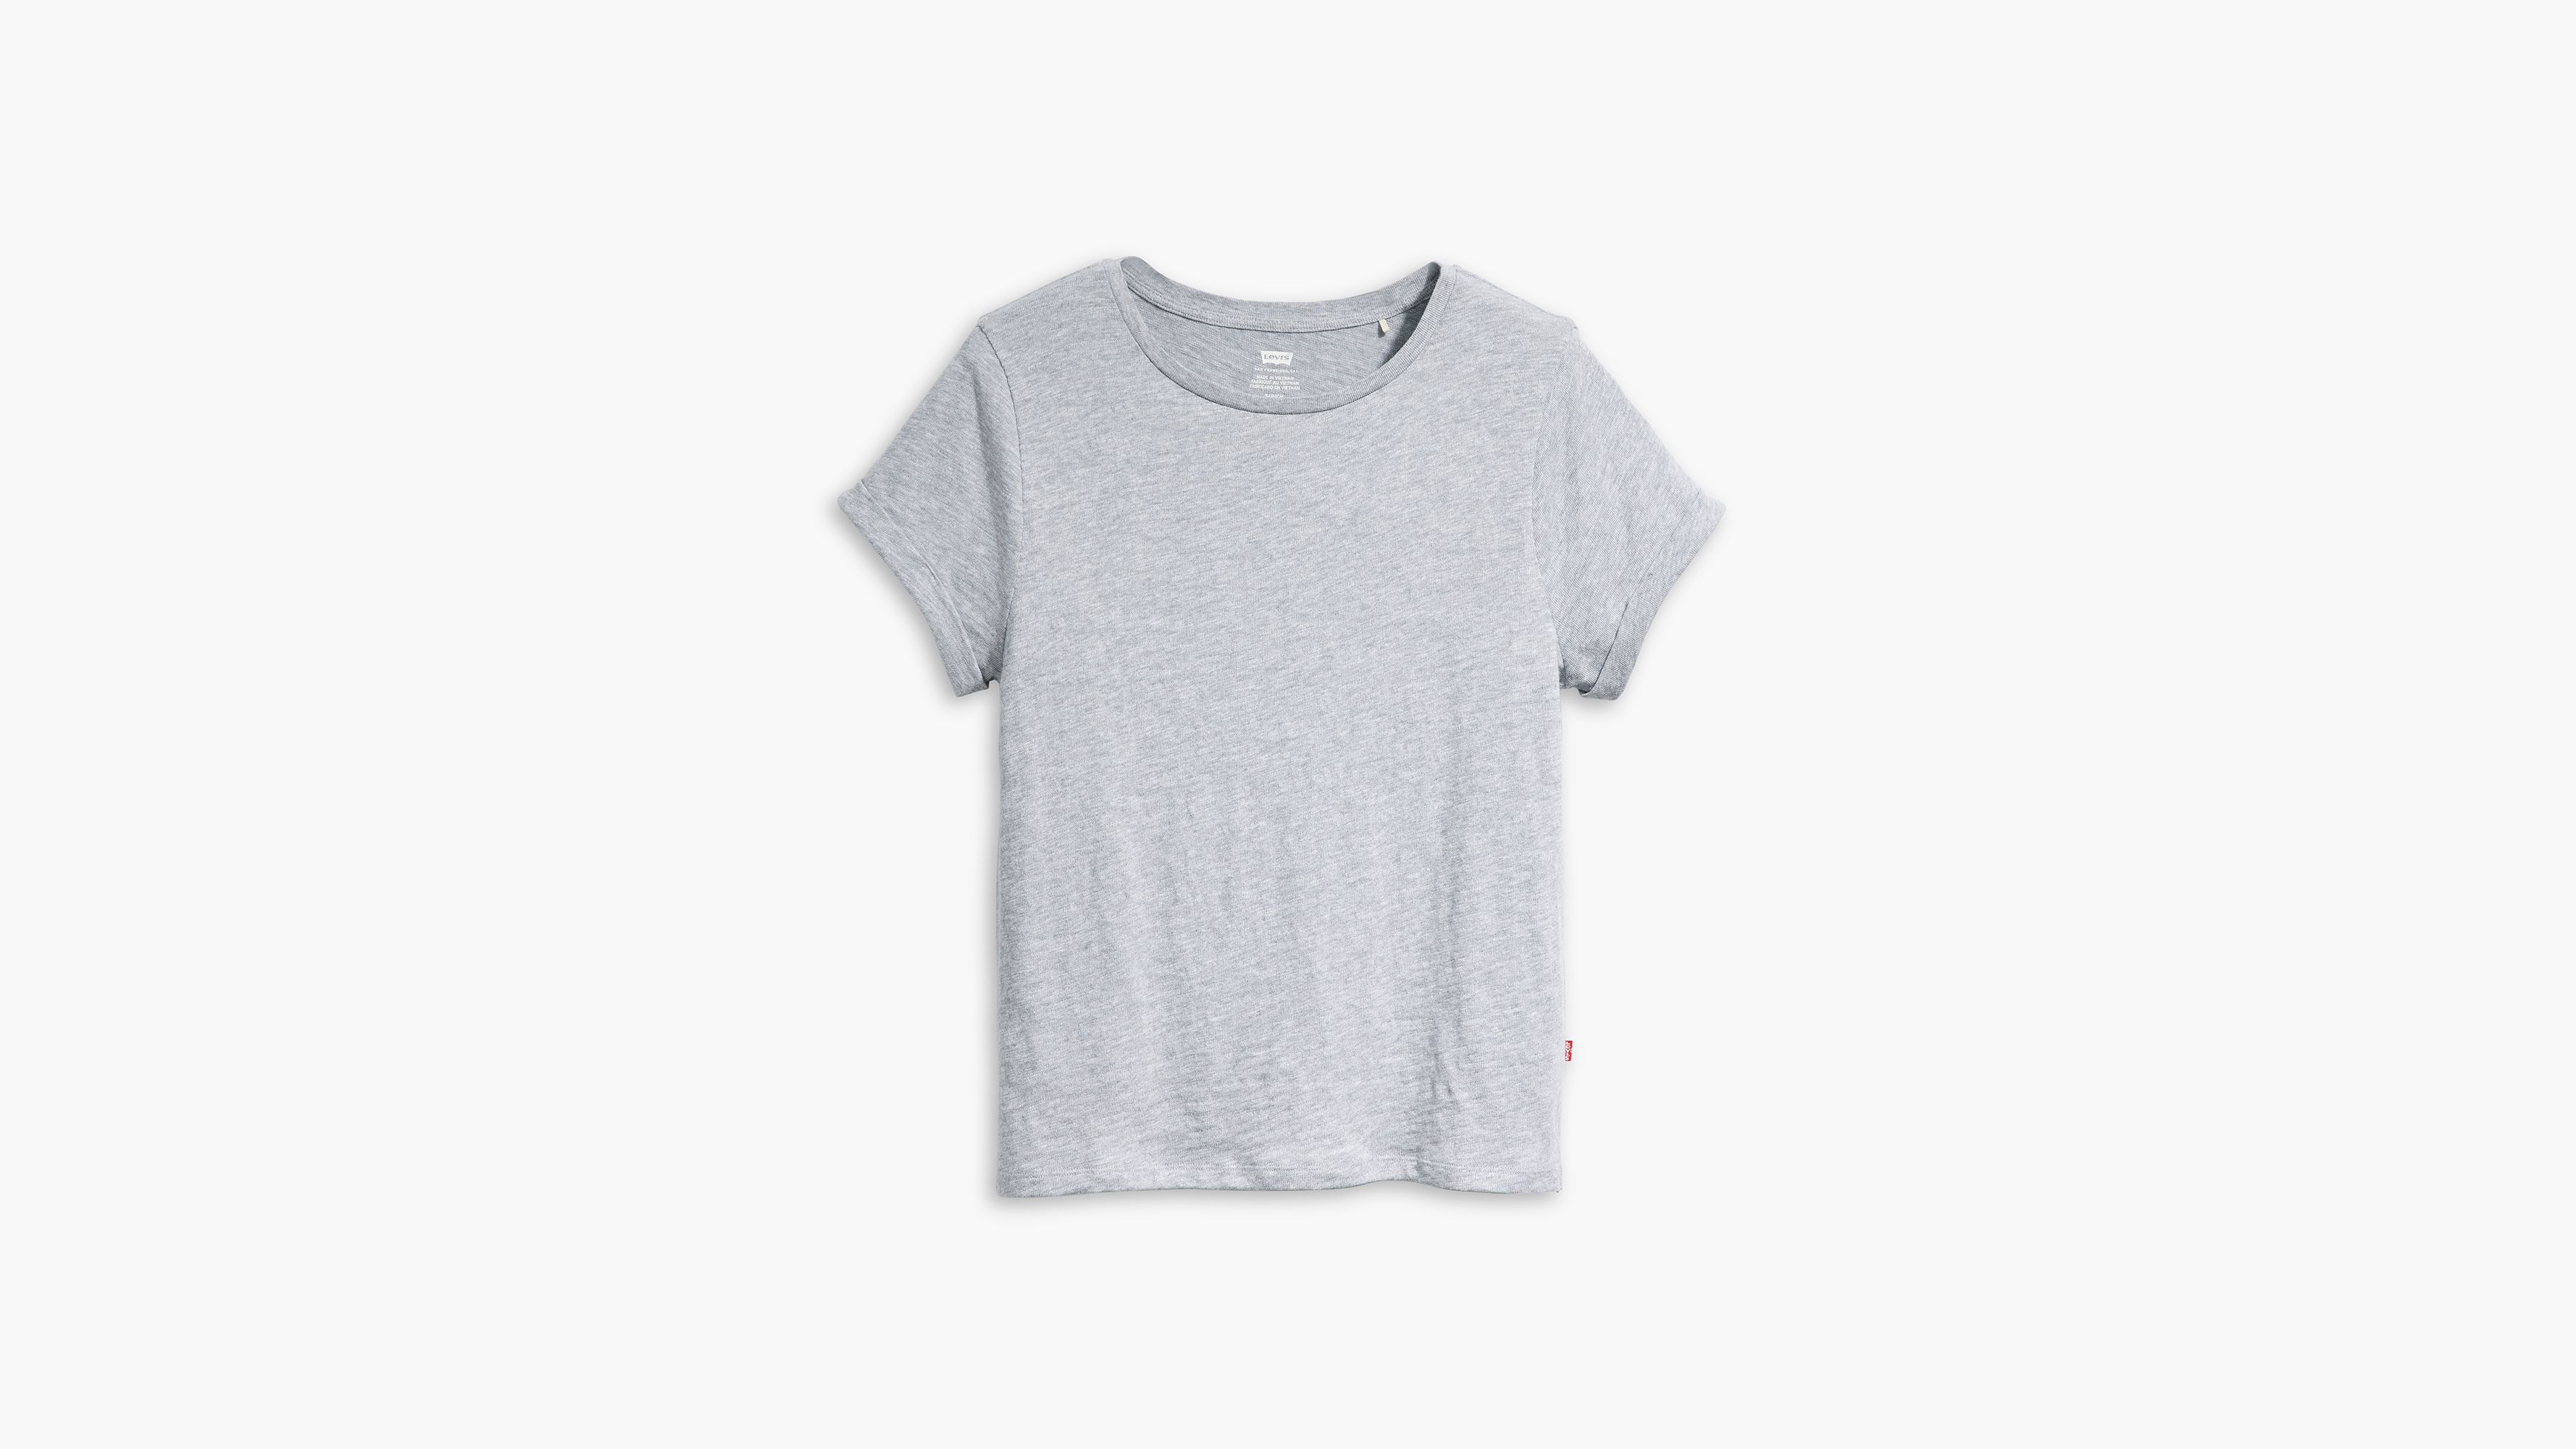 WOMEN'S SLIT SHORT SLEEVE TOP, Oyster Grey, T-Shirts & Tops